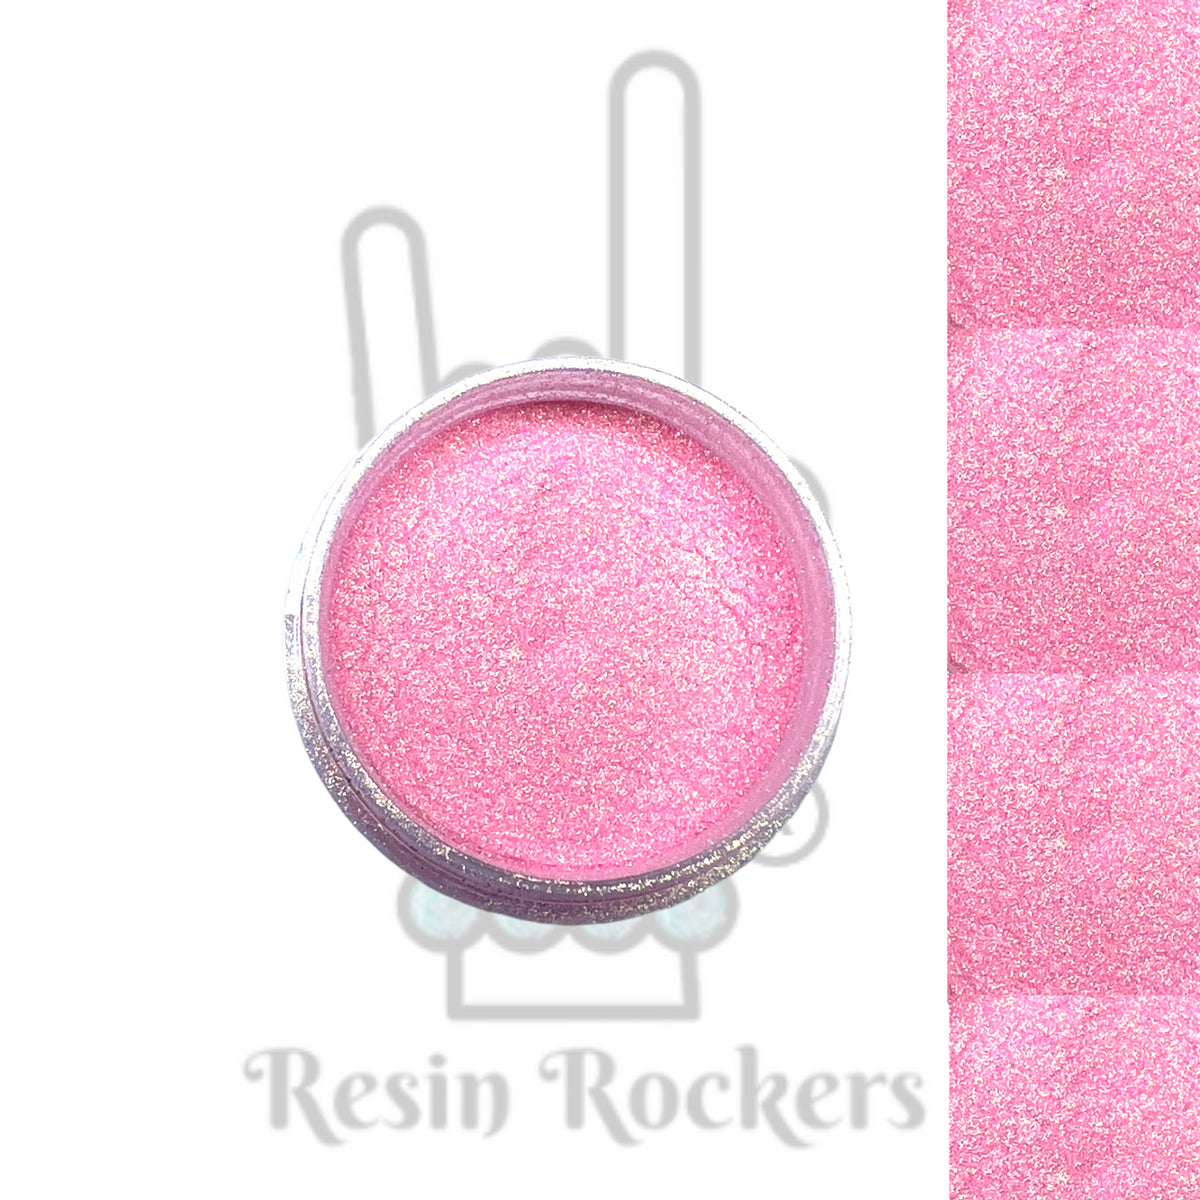 Resin Rockers Premium Color-shift Chameleon Pigment Powder Ultra Shine Pink Caddy